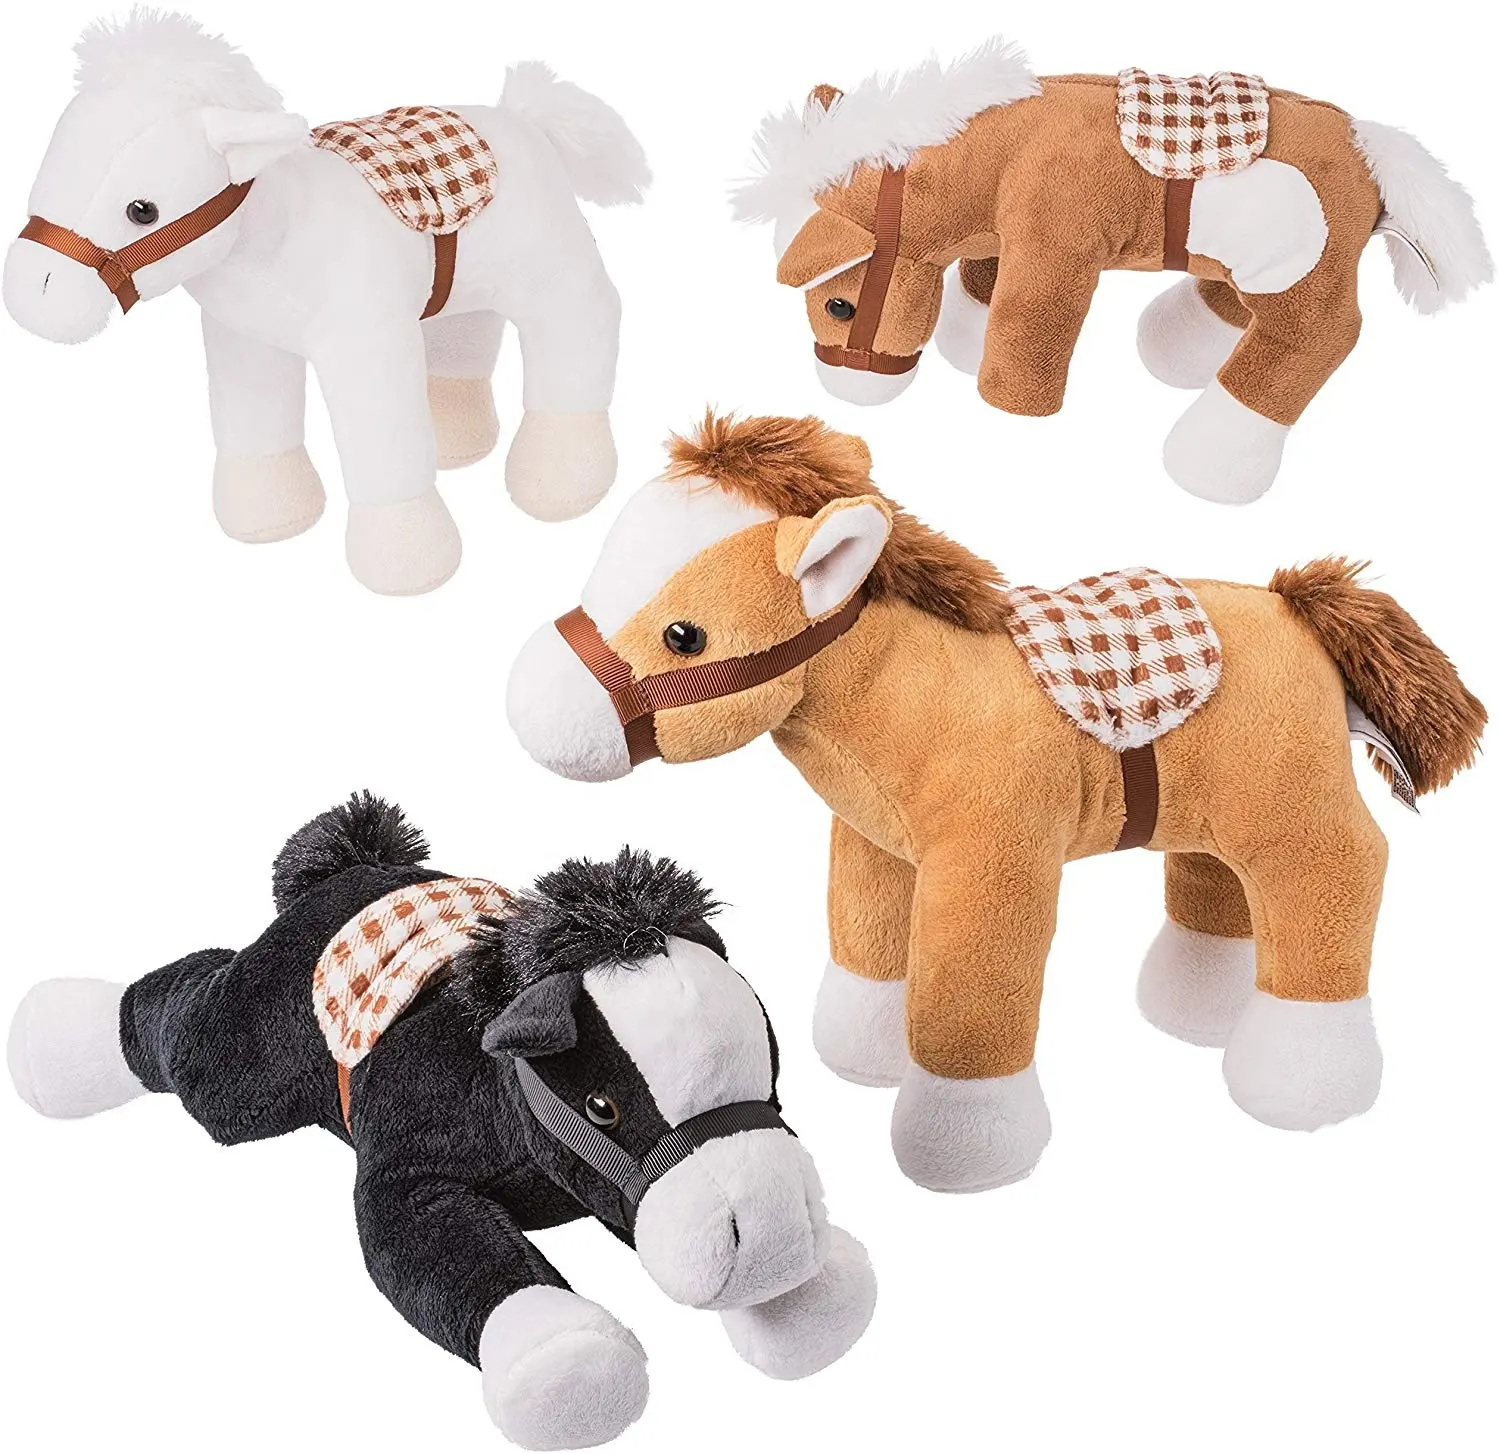 Promotional stuffed plush horse animal toys with custom logo soft brown white black plush farm animal toys plush horses